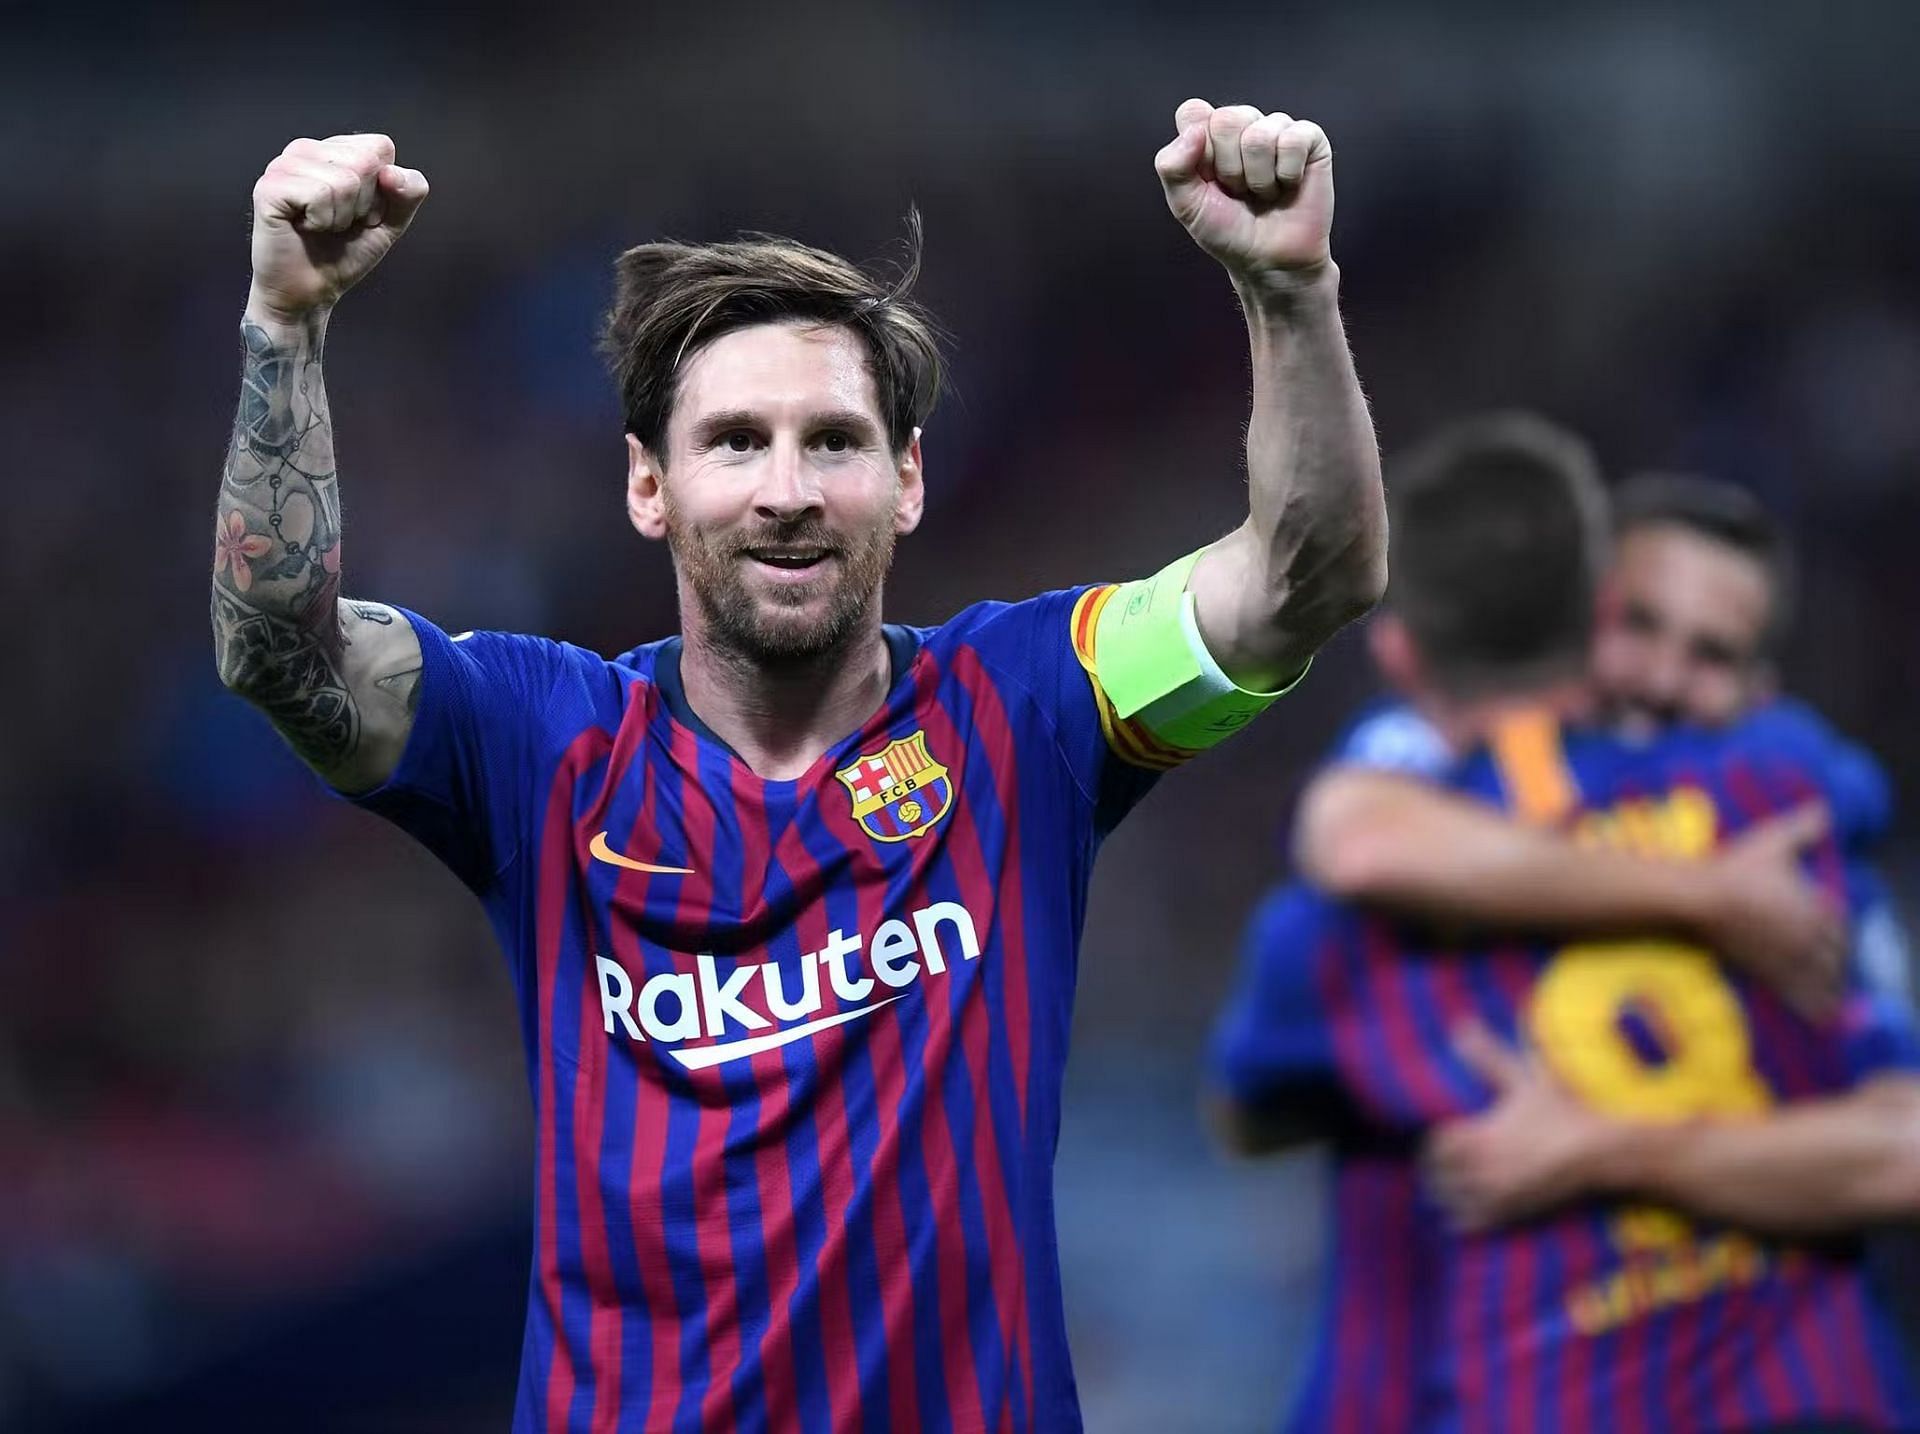 Messi scored a hattrick in under 30 mins